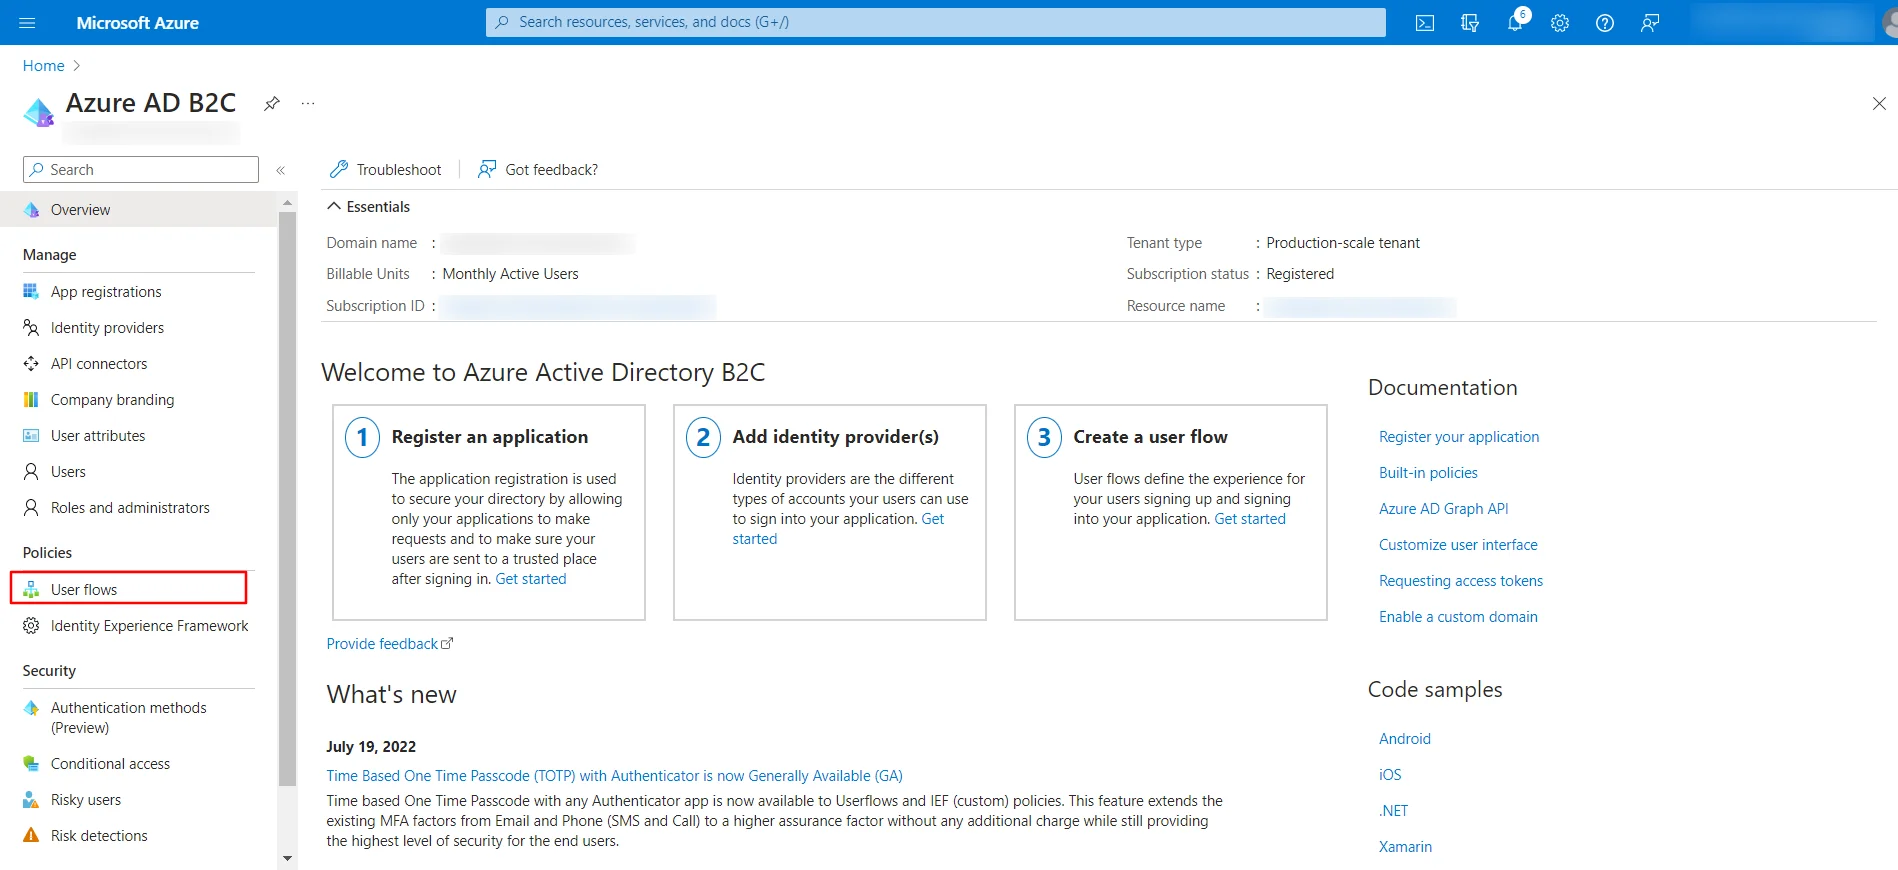 Microsoft AAD portal - select user flows option